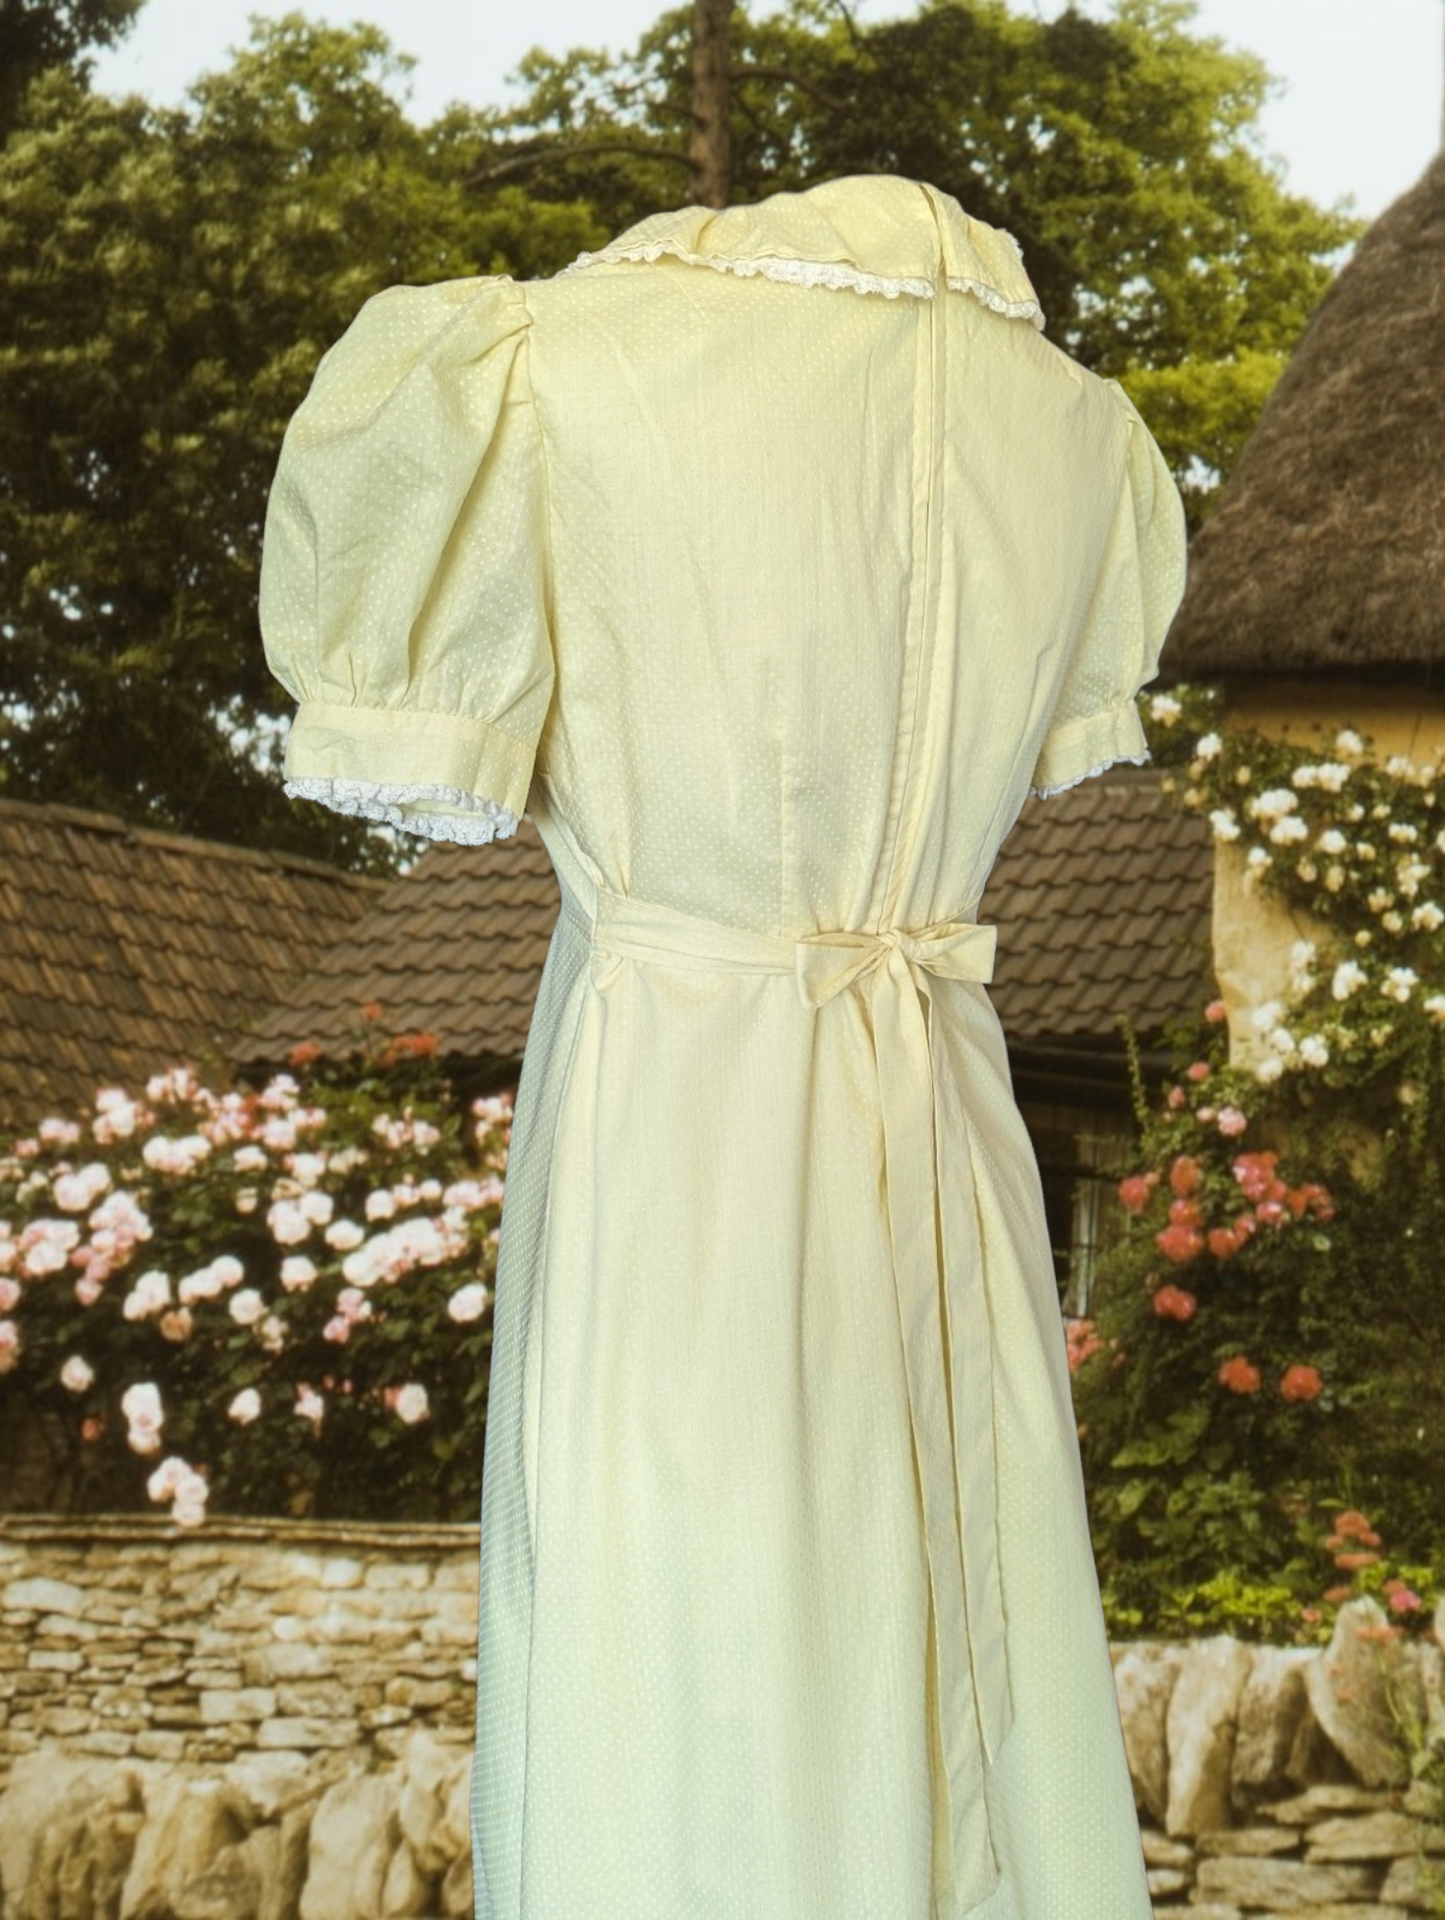 1970s Soft Yellow Gunne Sax Style Swiss Dot Prairie Dress with Puff Sleeves, Ruffled Collar and A-Line Skirt